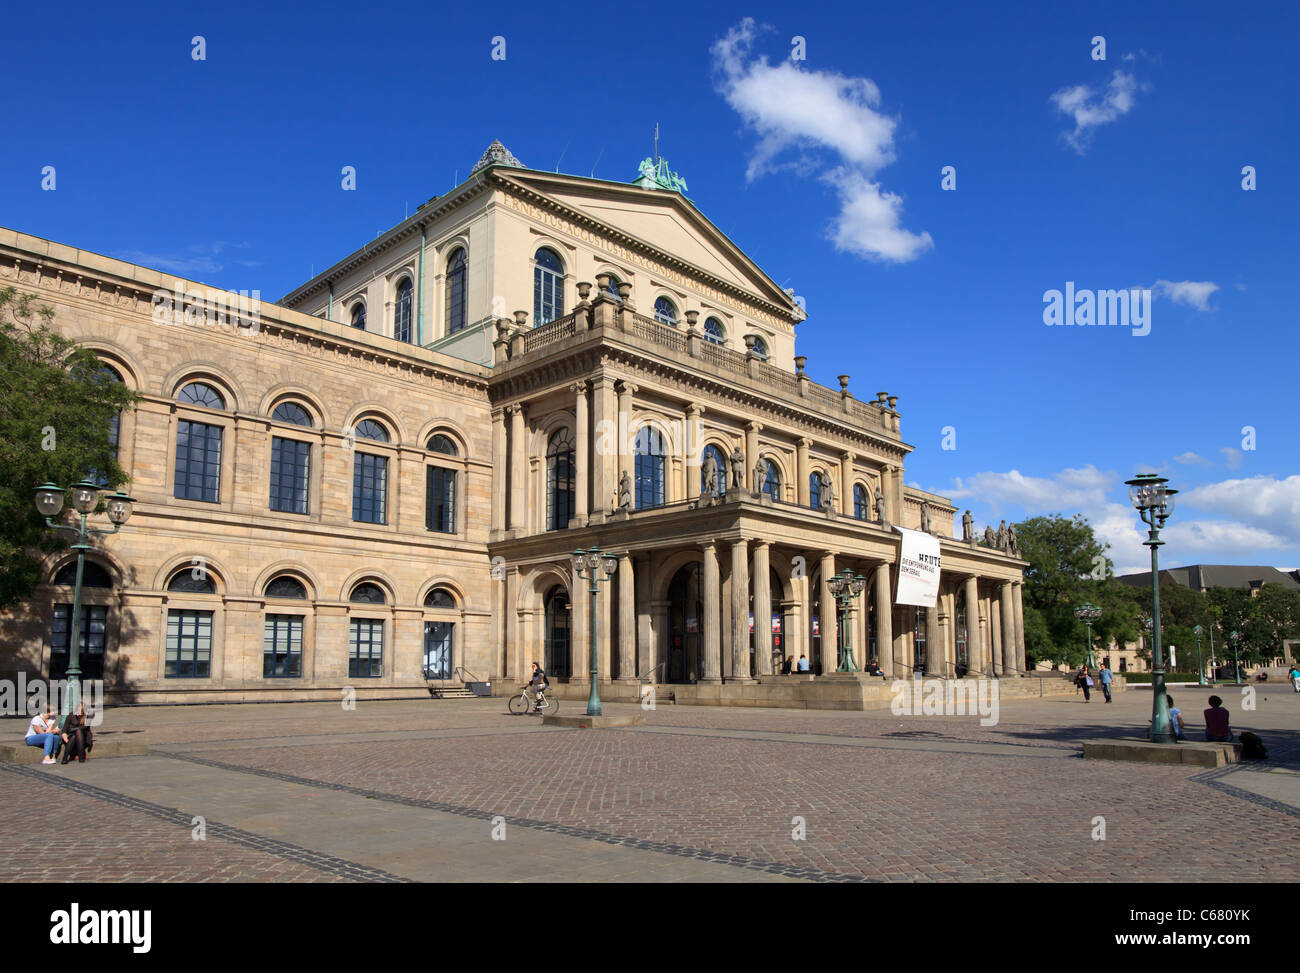 The Opera House in Hanover, Germany. Stock Photo